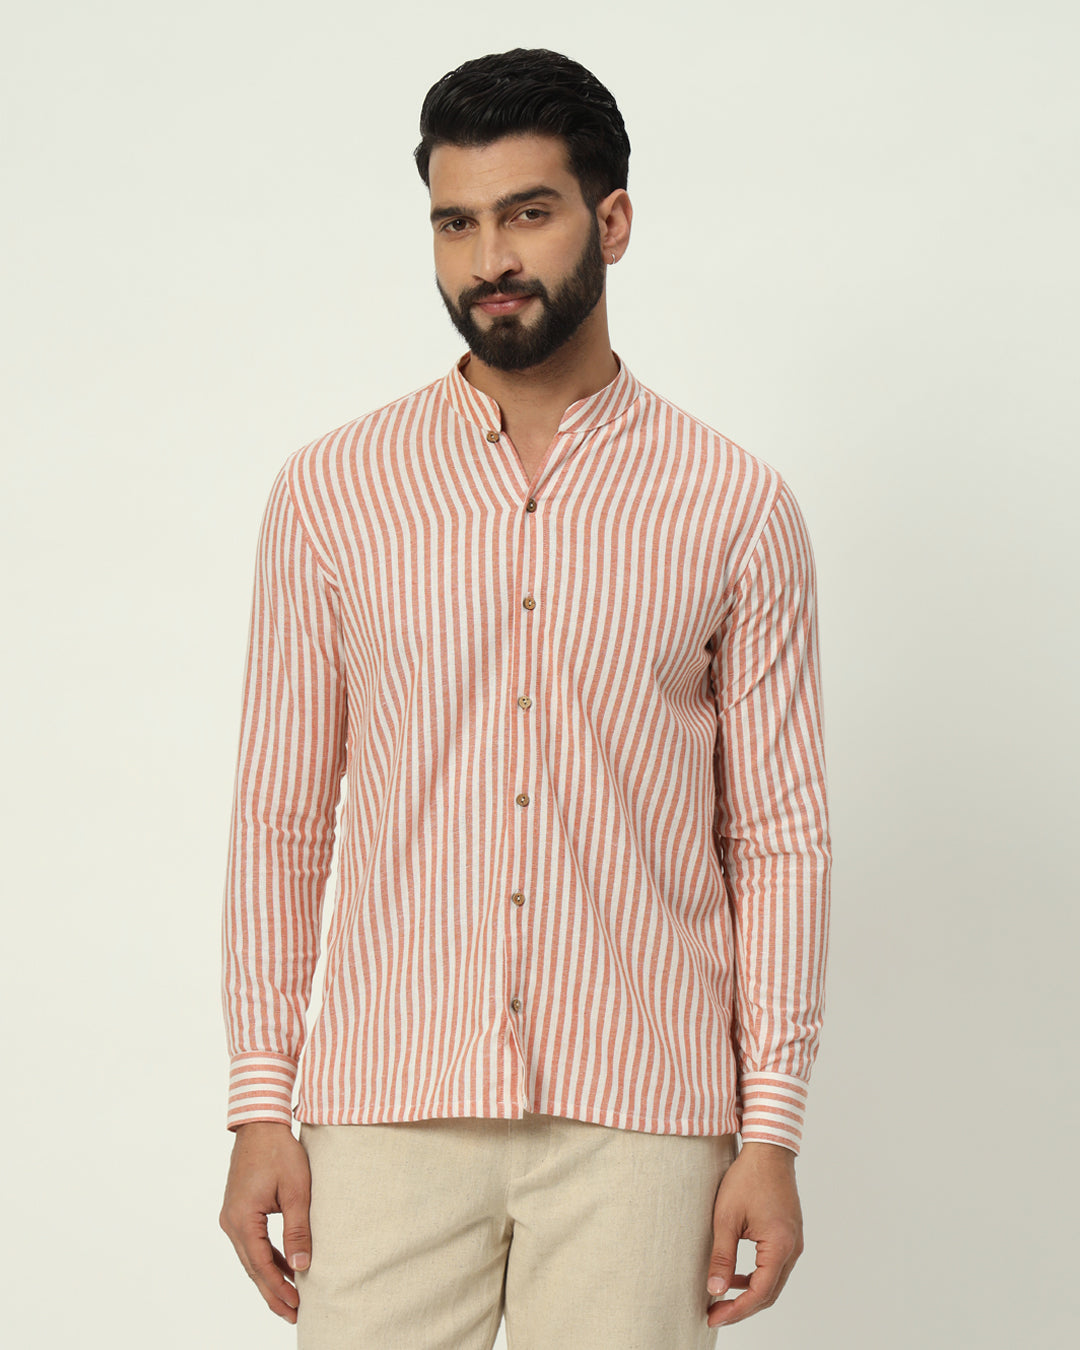 Rustic Charm Stripes Mandarin Collar Men's Shirt